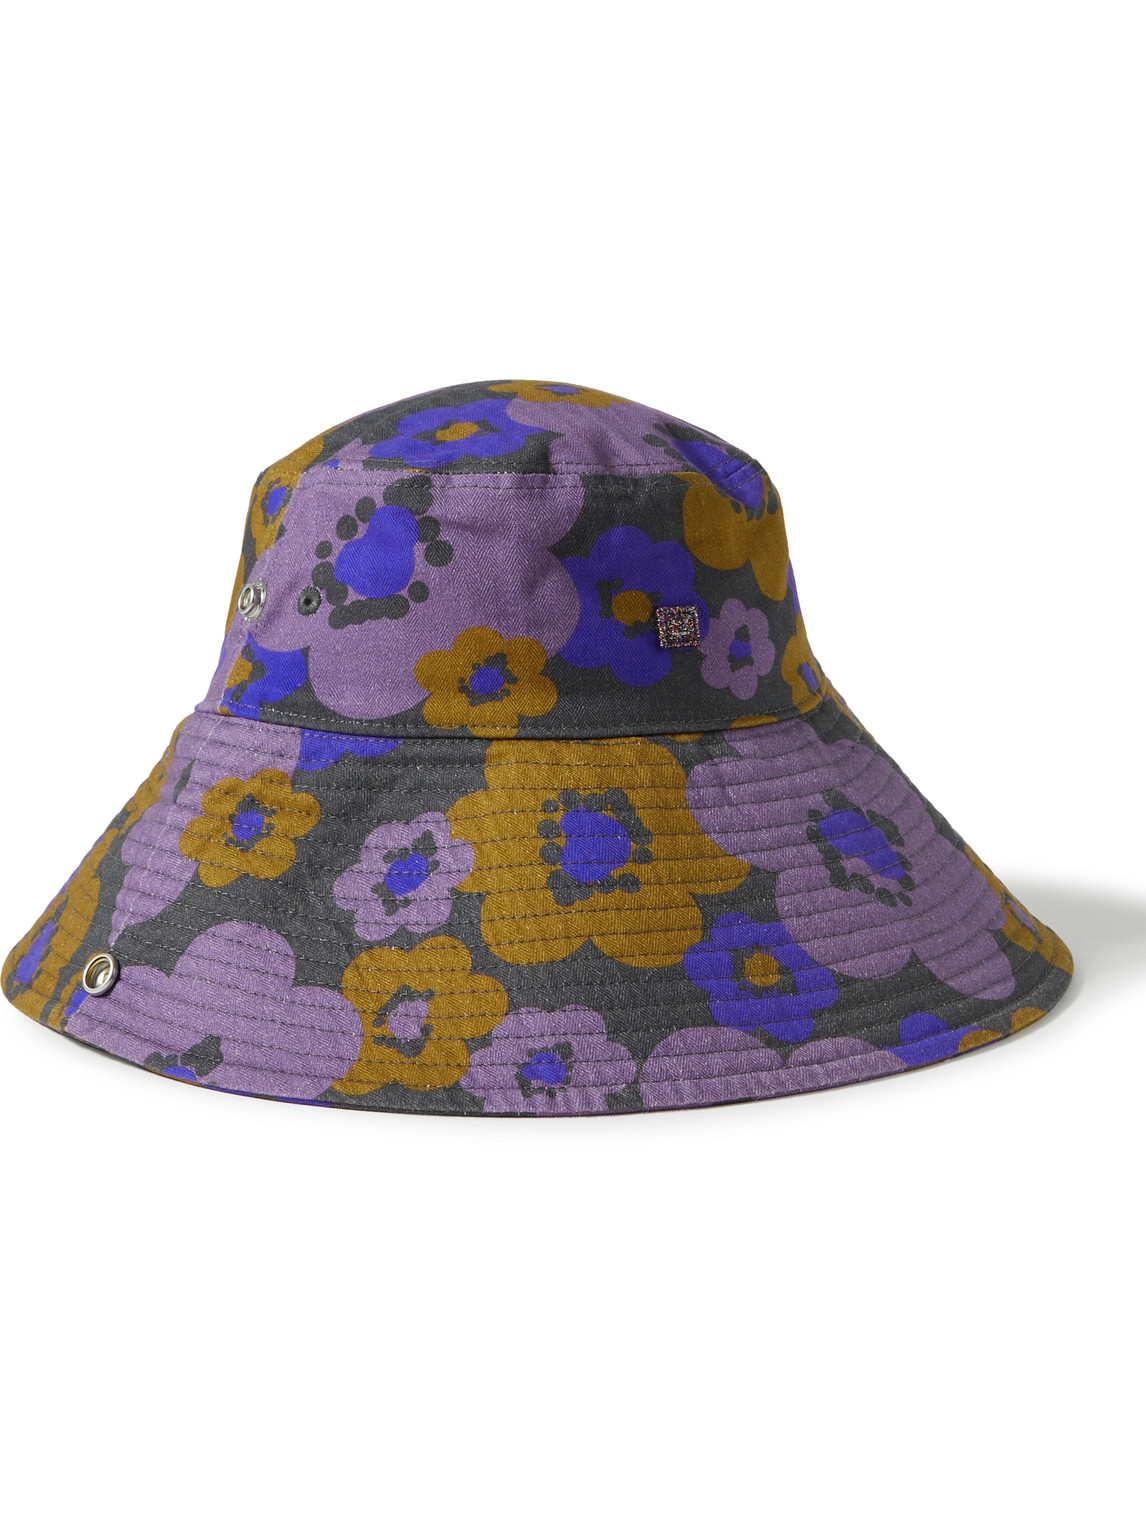 Acne Studios - Floral-Print Herringbone Cotton Bucket Hat - Men - Purple - L/XL